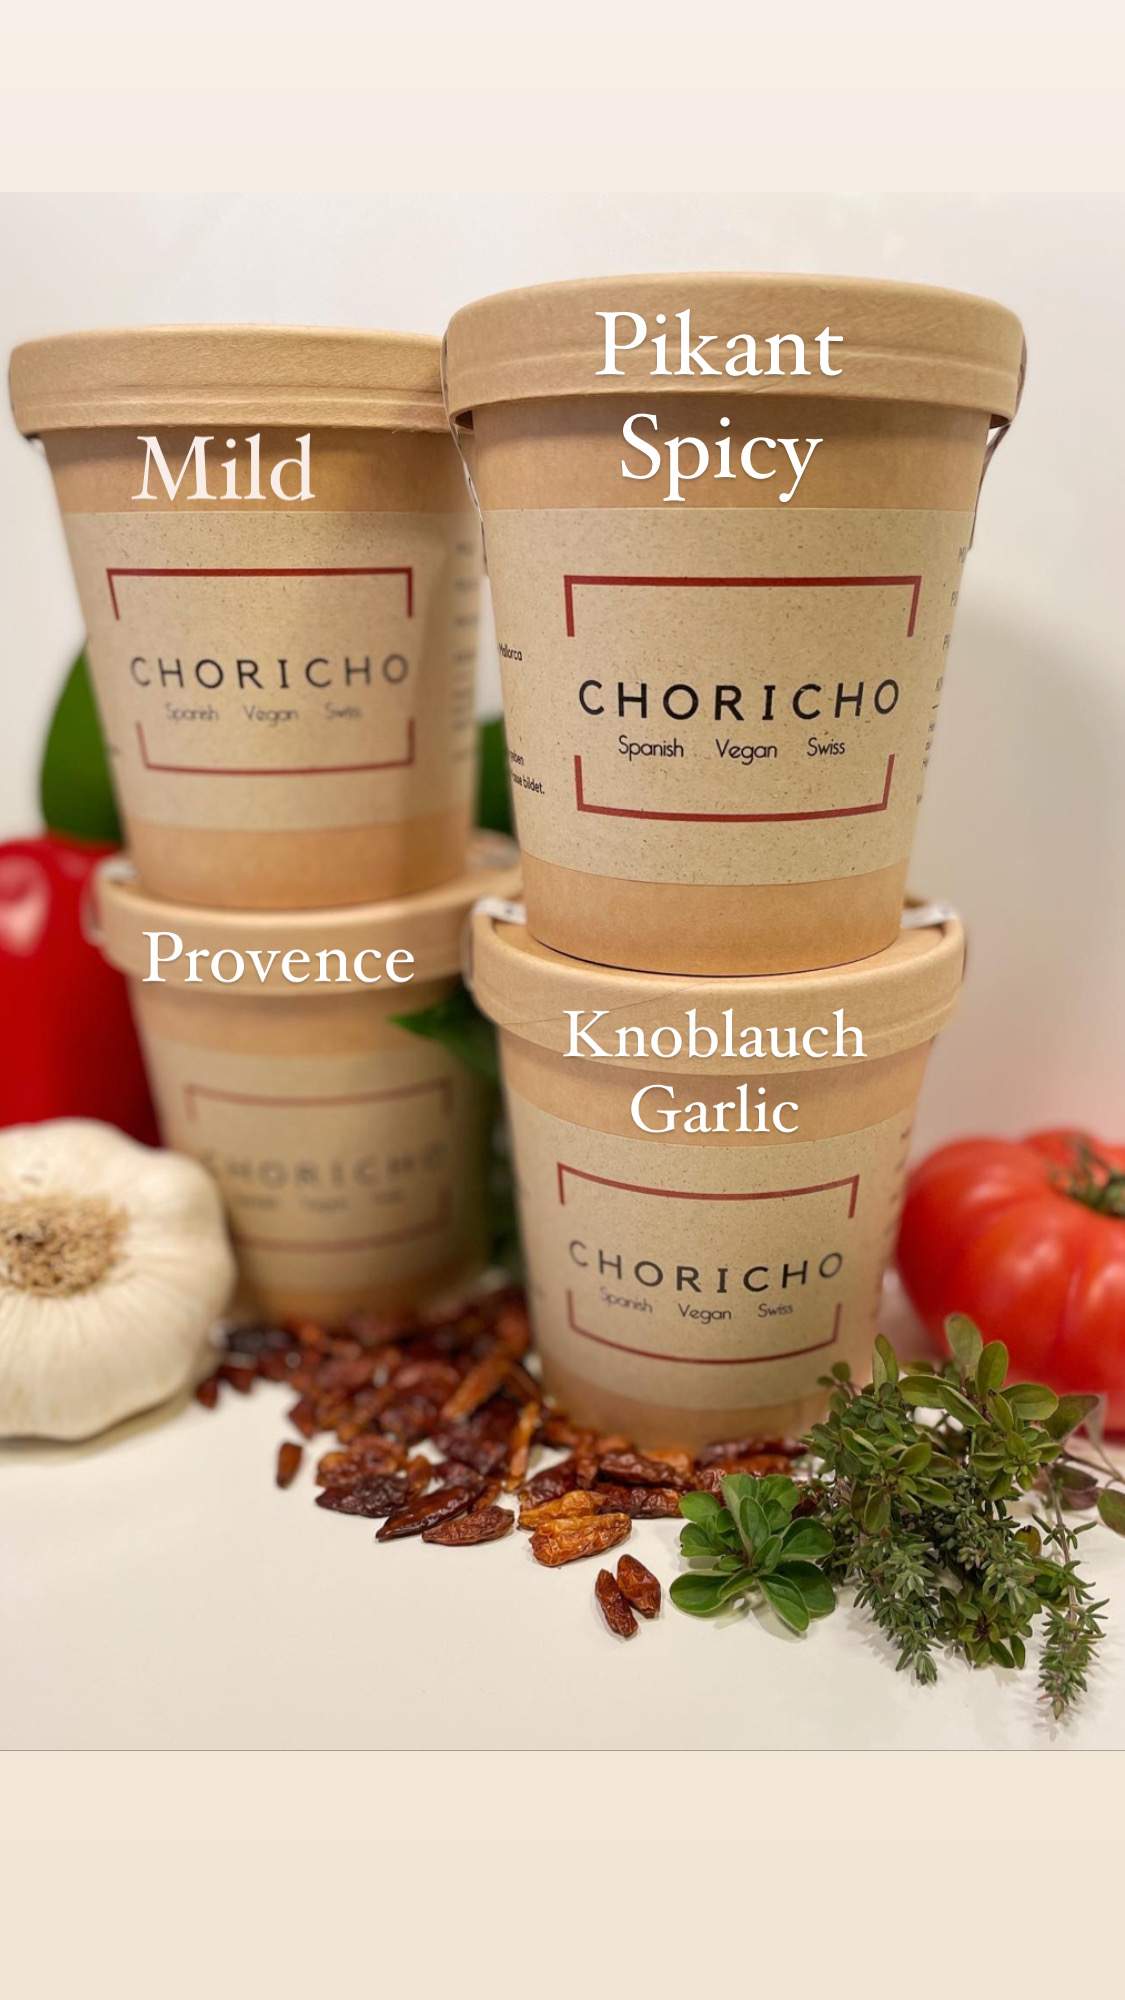 Vegan Chorizo Switzerland Plant-based Choricho